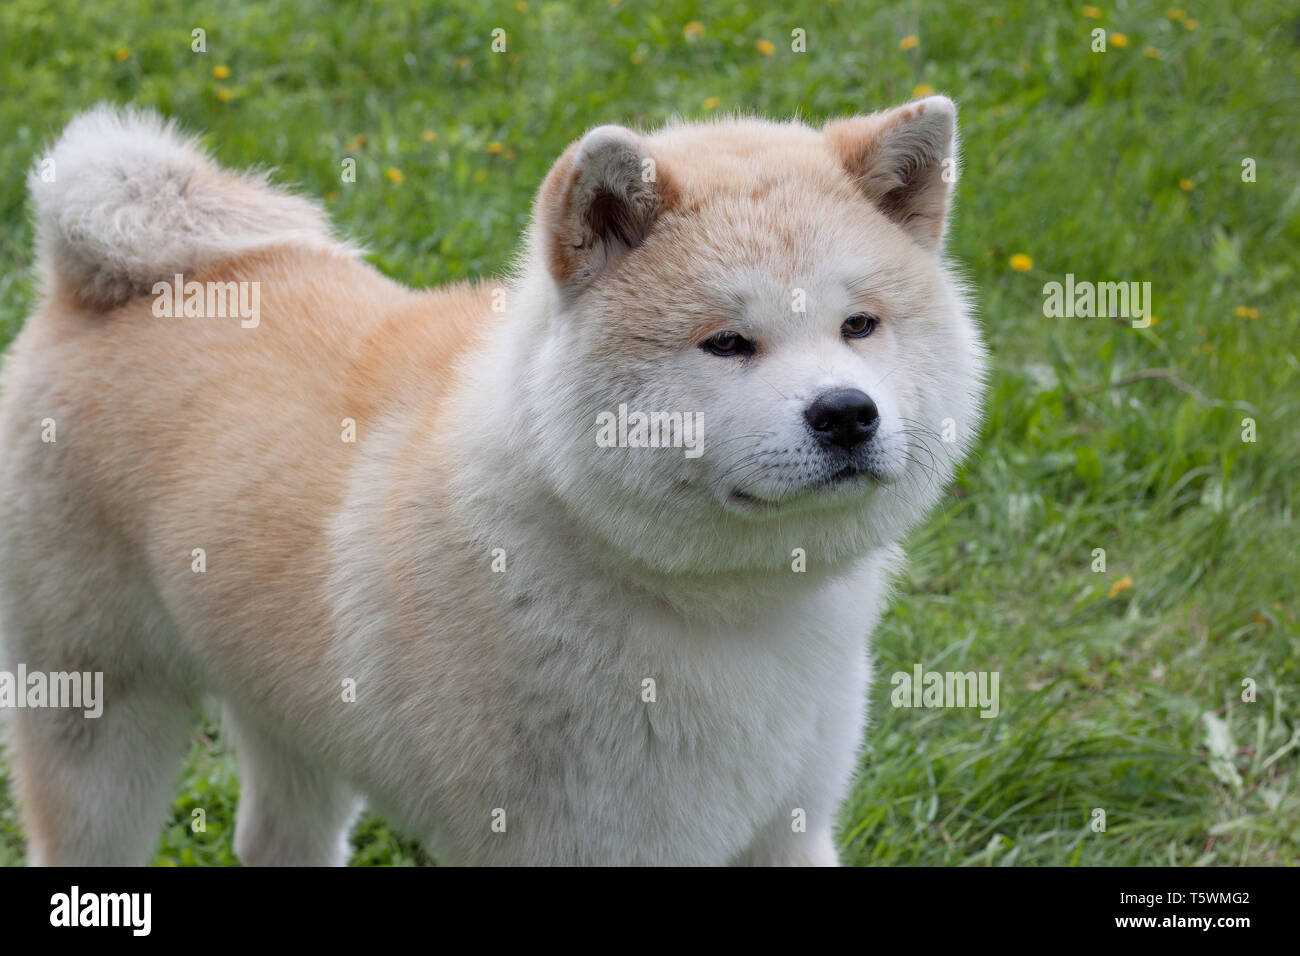 Cute Akita Inu Is Standing On A Blooming Meadow Akita Ken Or Japanese Akita Pet Animals Stock Photo Alamy